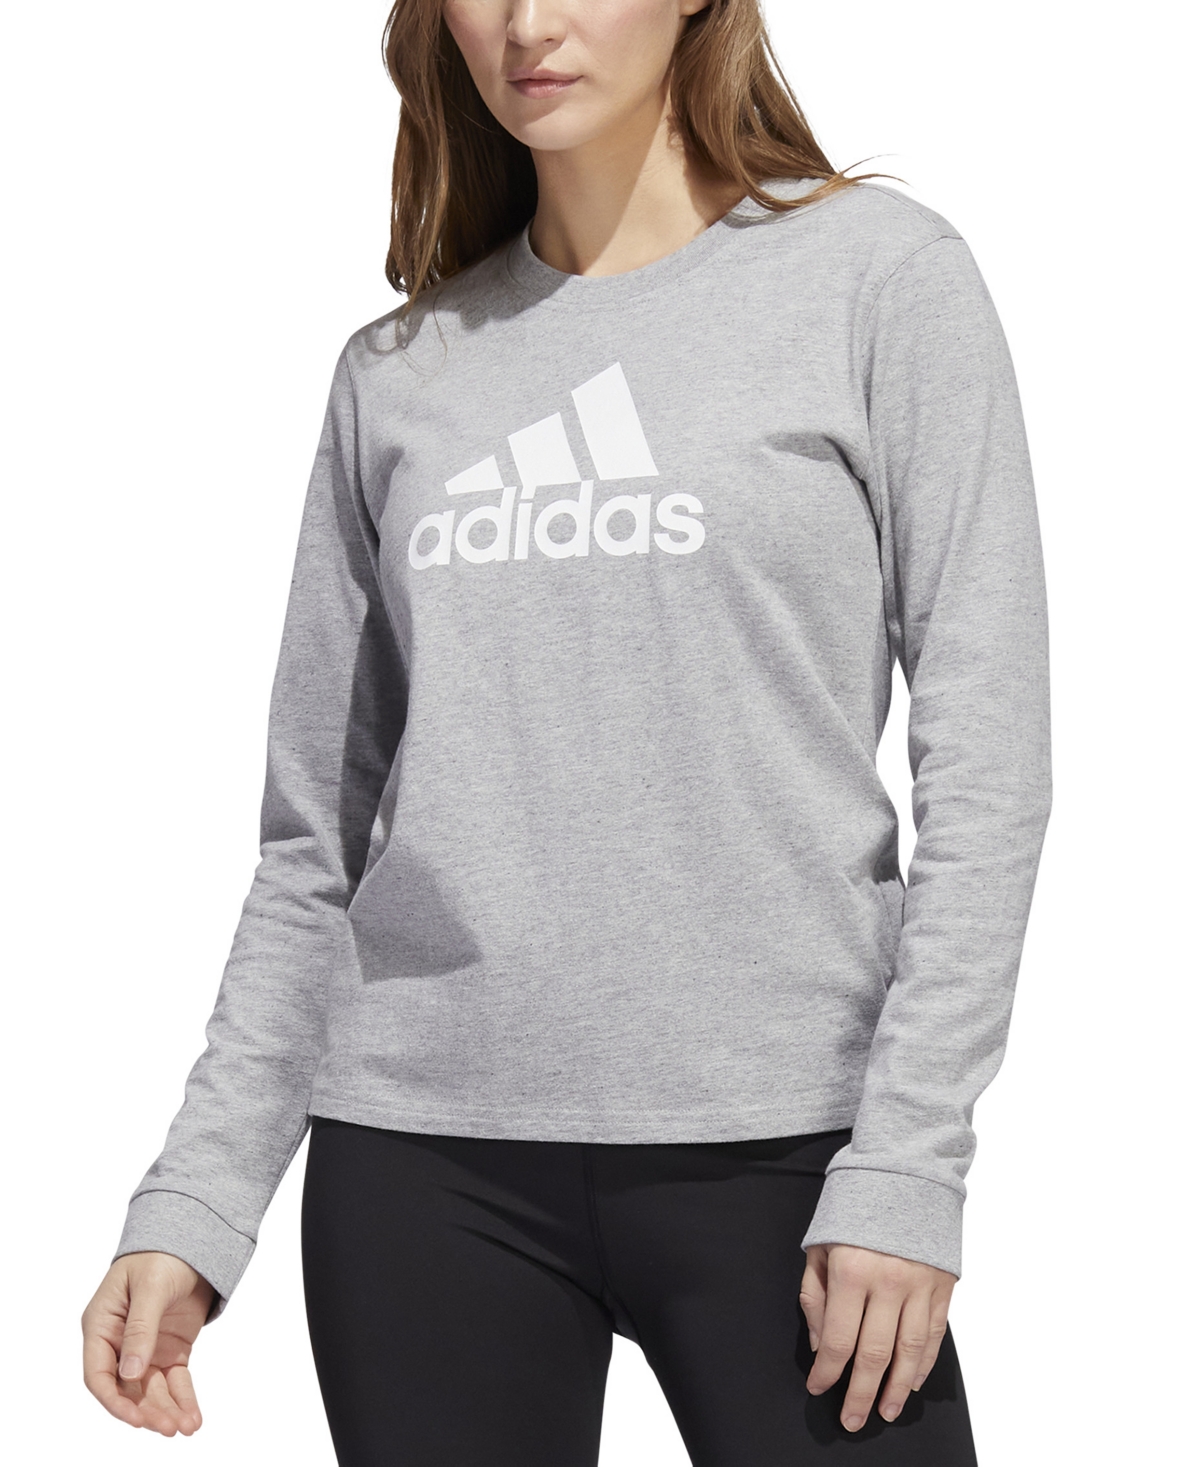 adidas Women's Cotton Badge of Sport Long-Sleeve T-Shirt